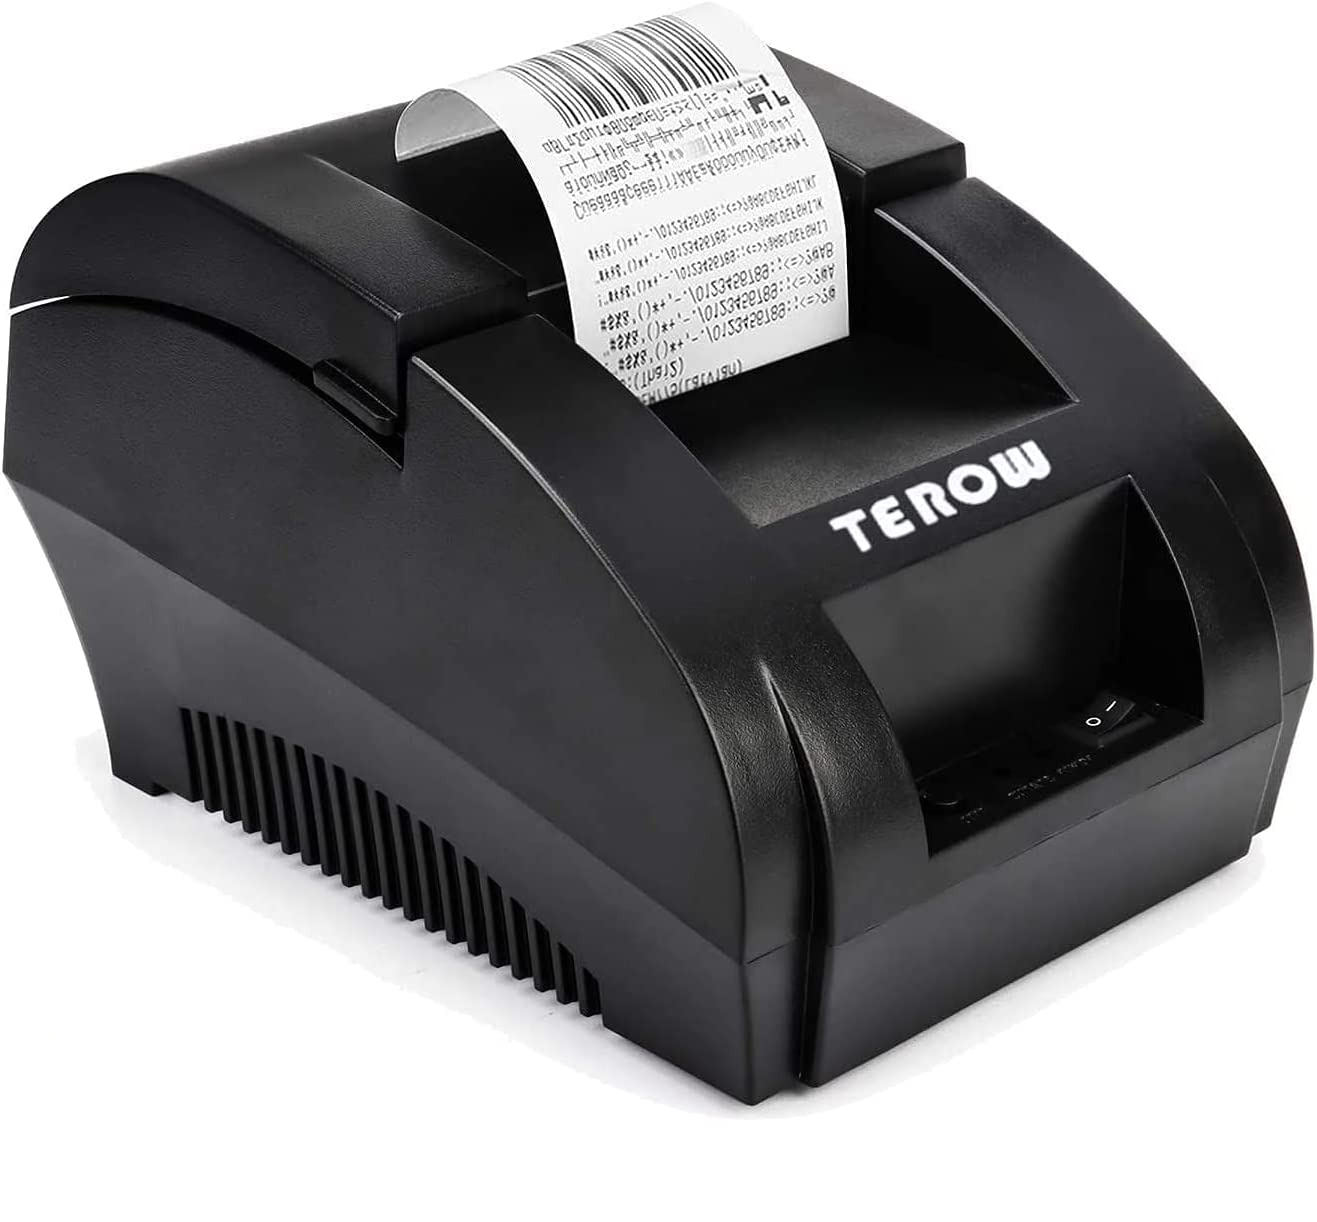 TEROW T5890K USB Thermal Receipt Printer 58MM POS Printer Portable Label Printer